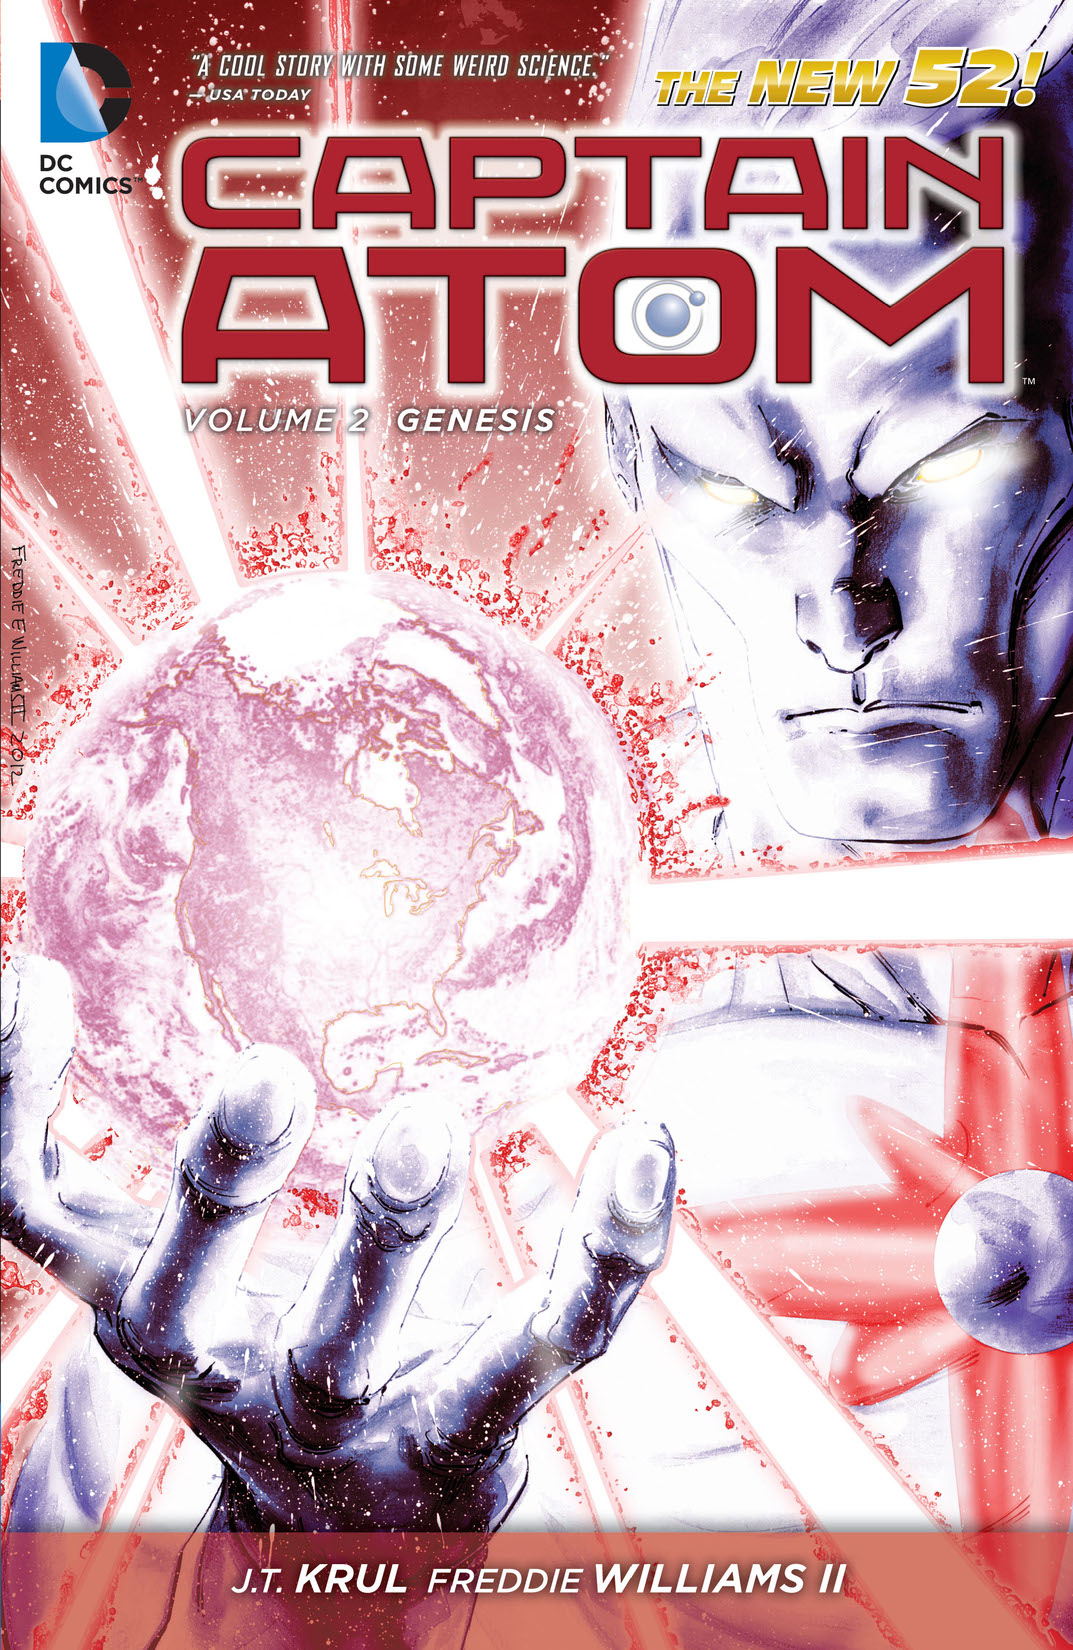 Captain Atom Vol. 2: Genesis preview images